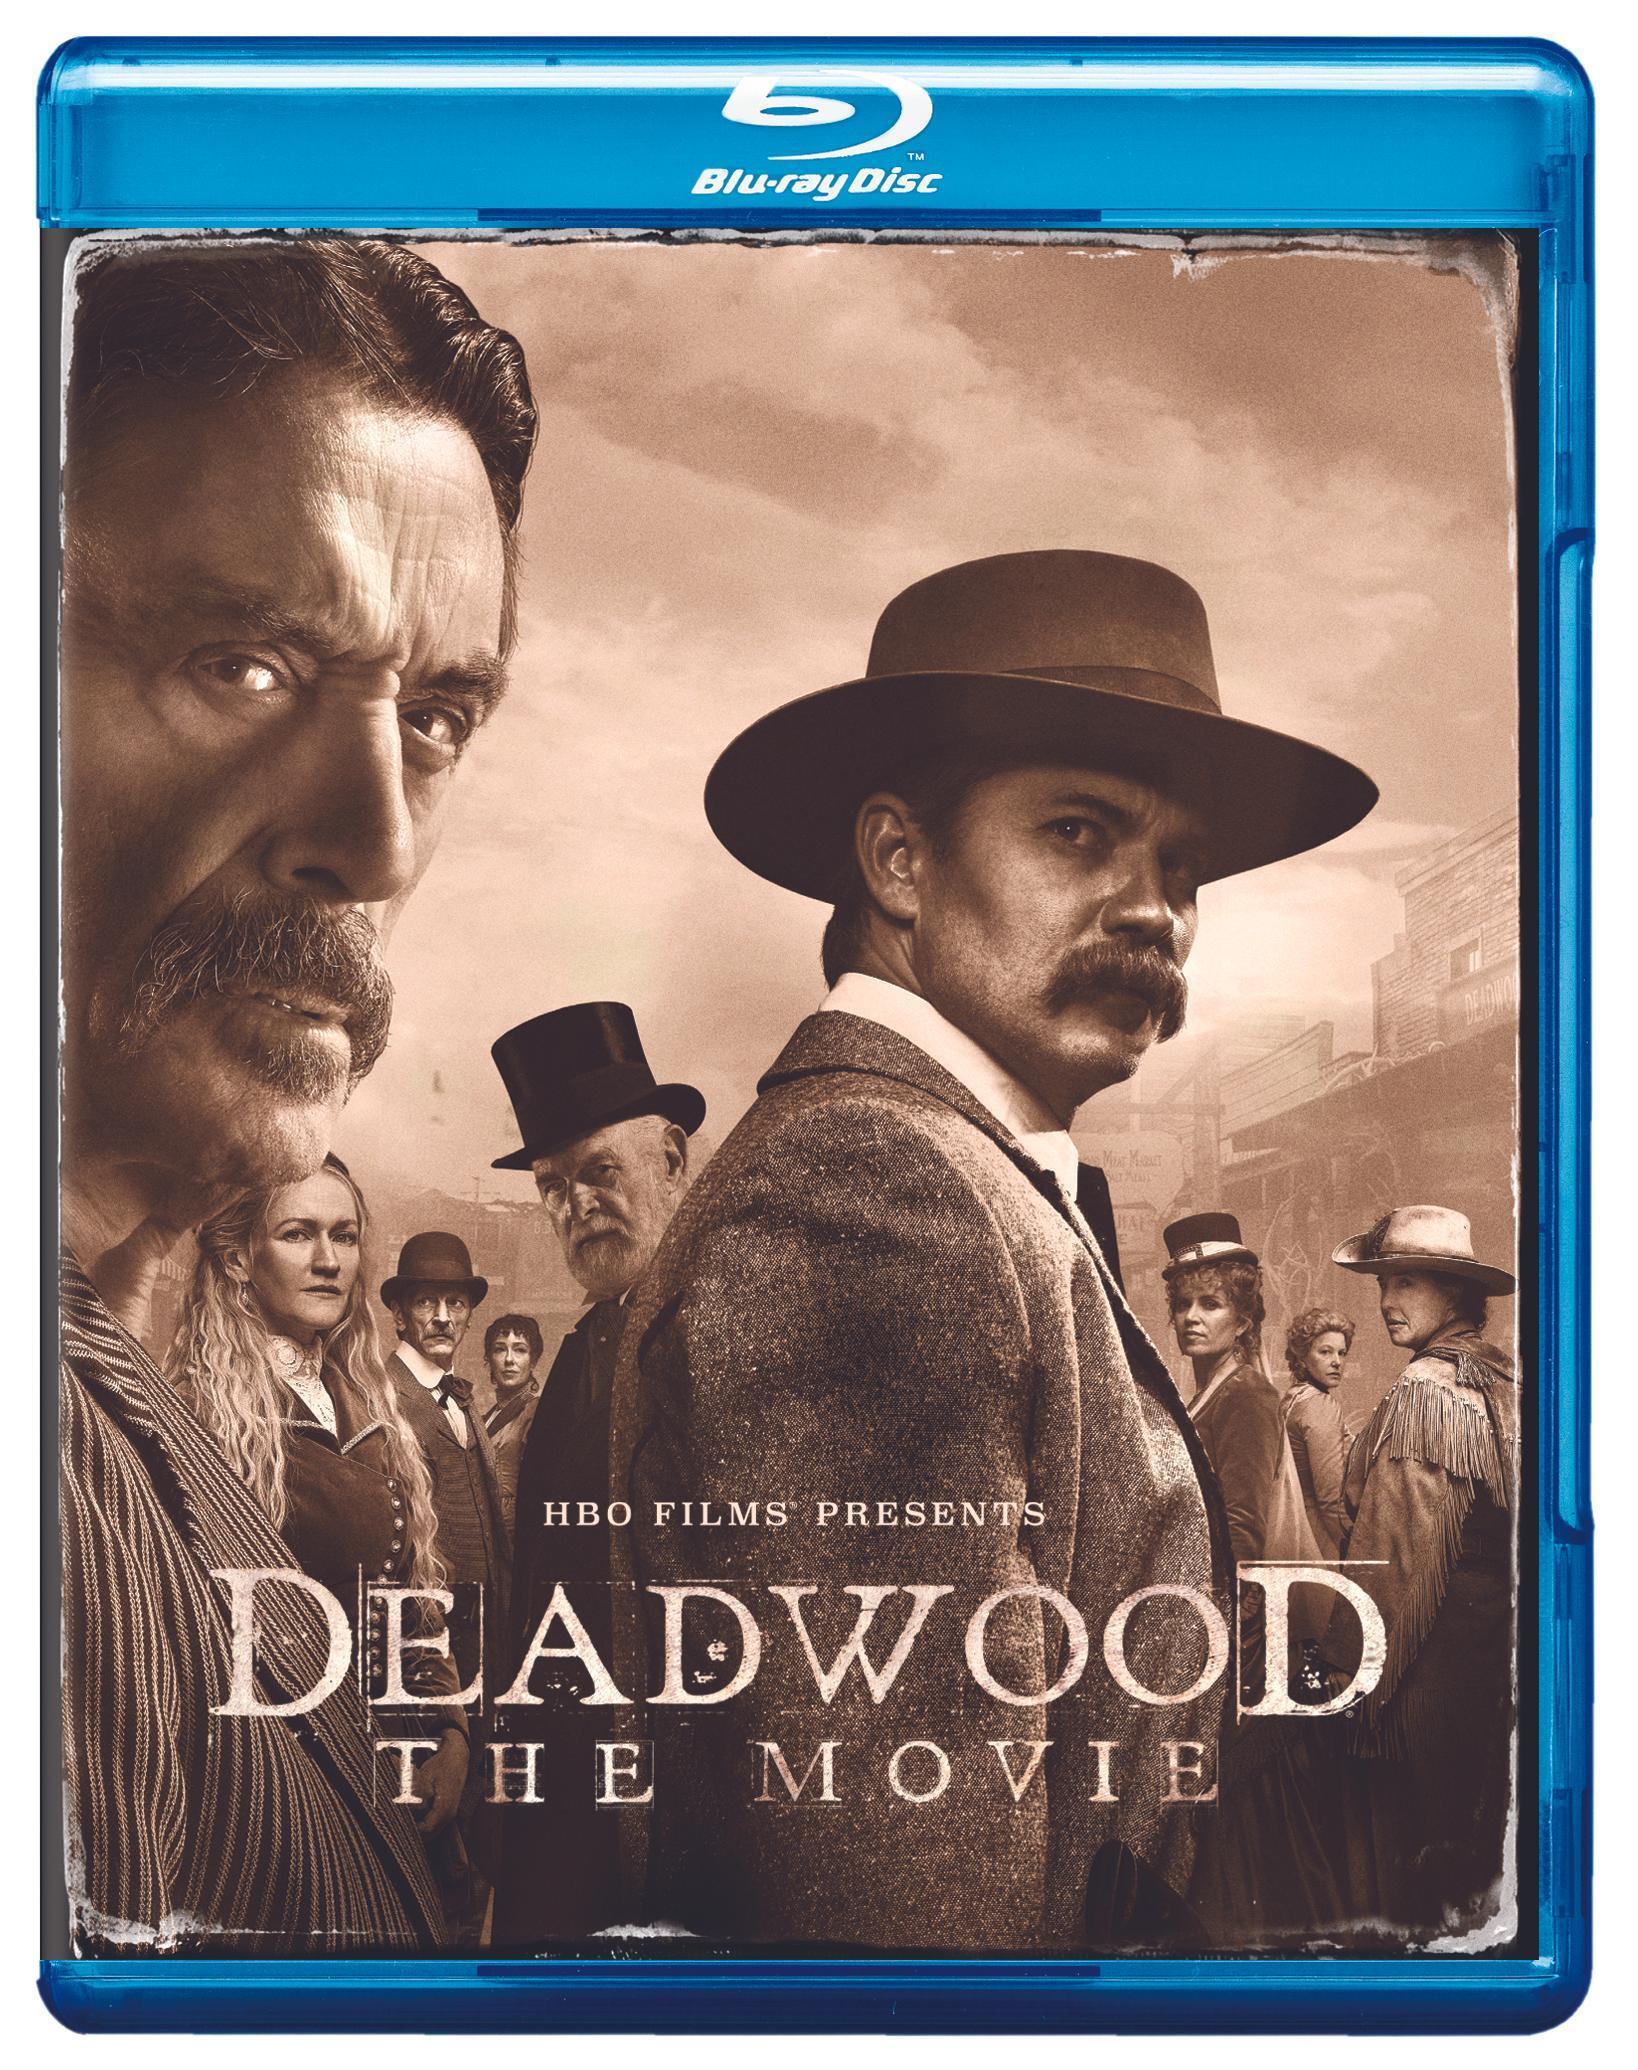 Deadwood: The Movie - Blu-ray [ 2019 ]  - Western Movies On Blu-ray - Movies On GRUV